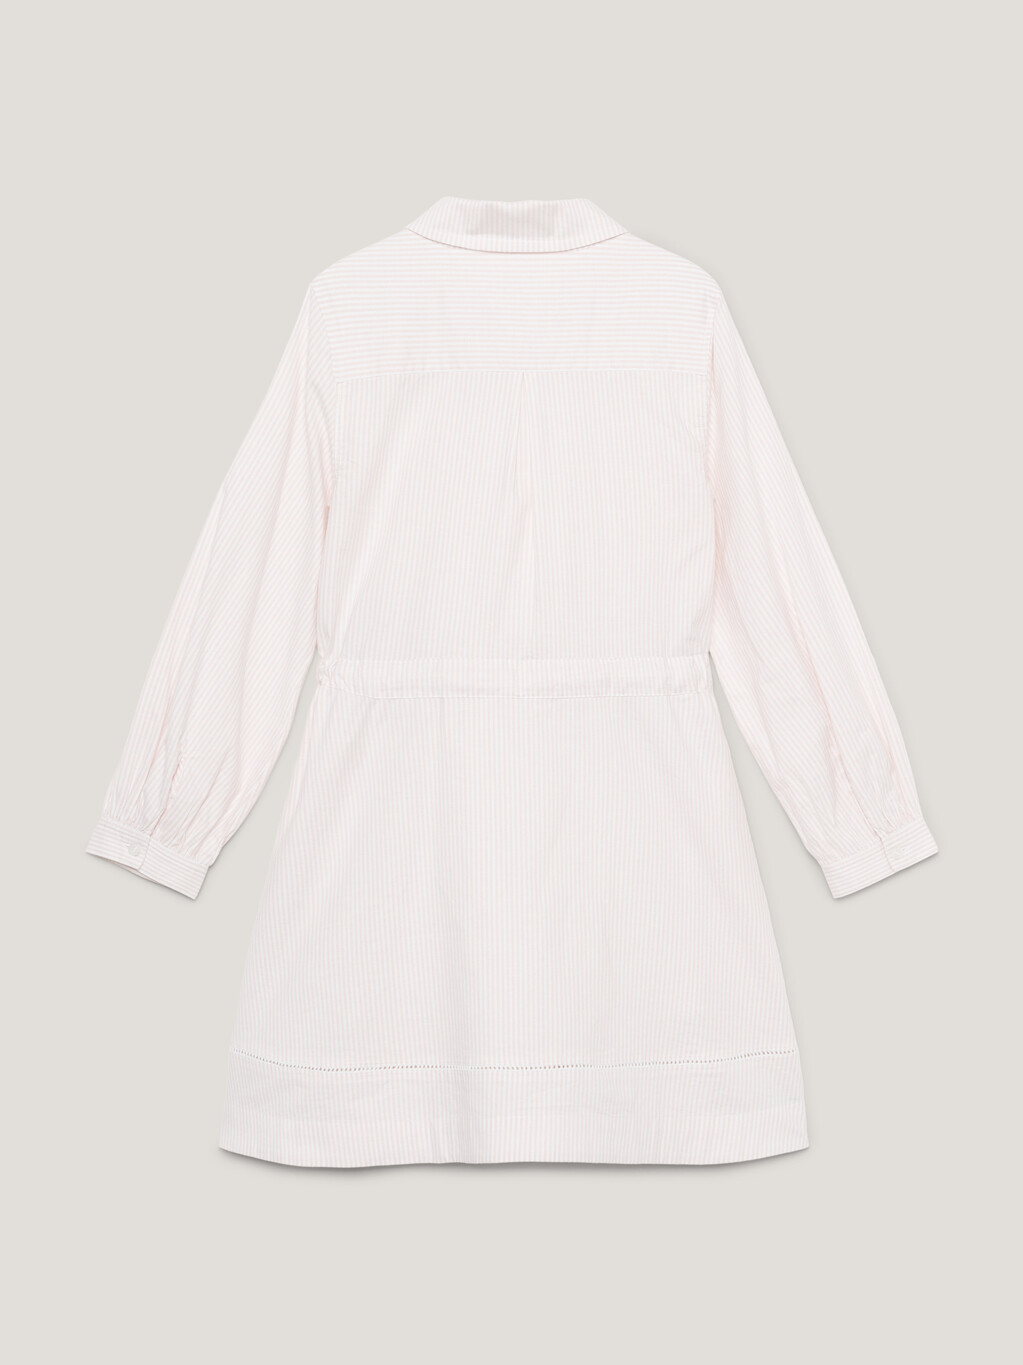 Essential Ithaca 條紋襯衫連身裙, Whimsy Pink / White Stripe, hi-res